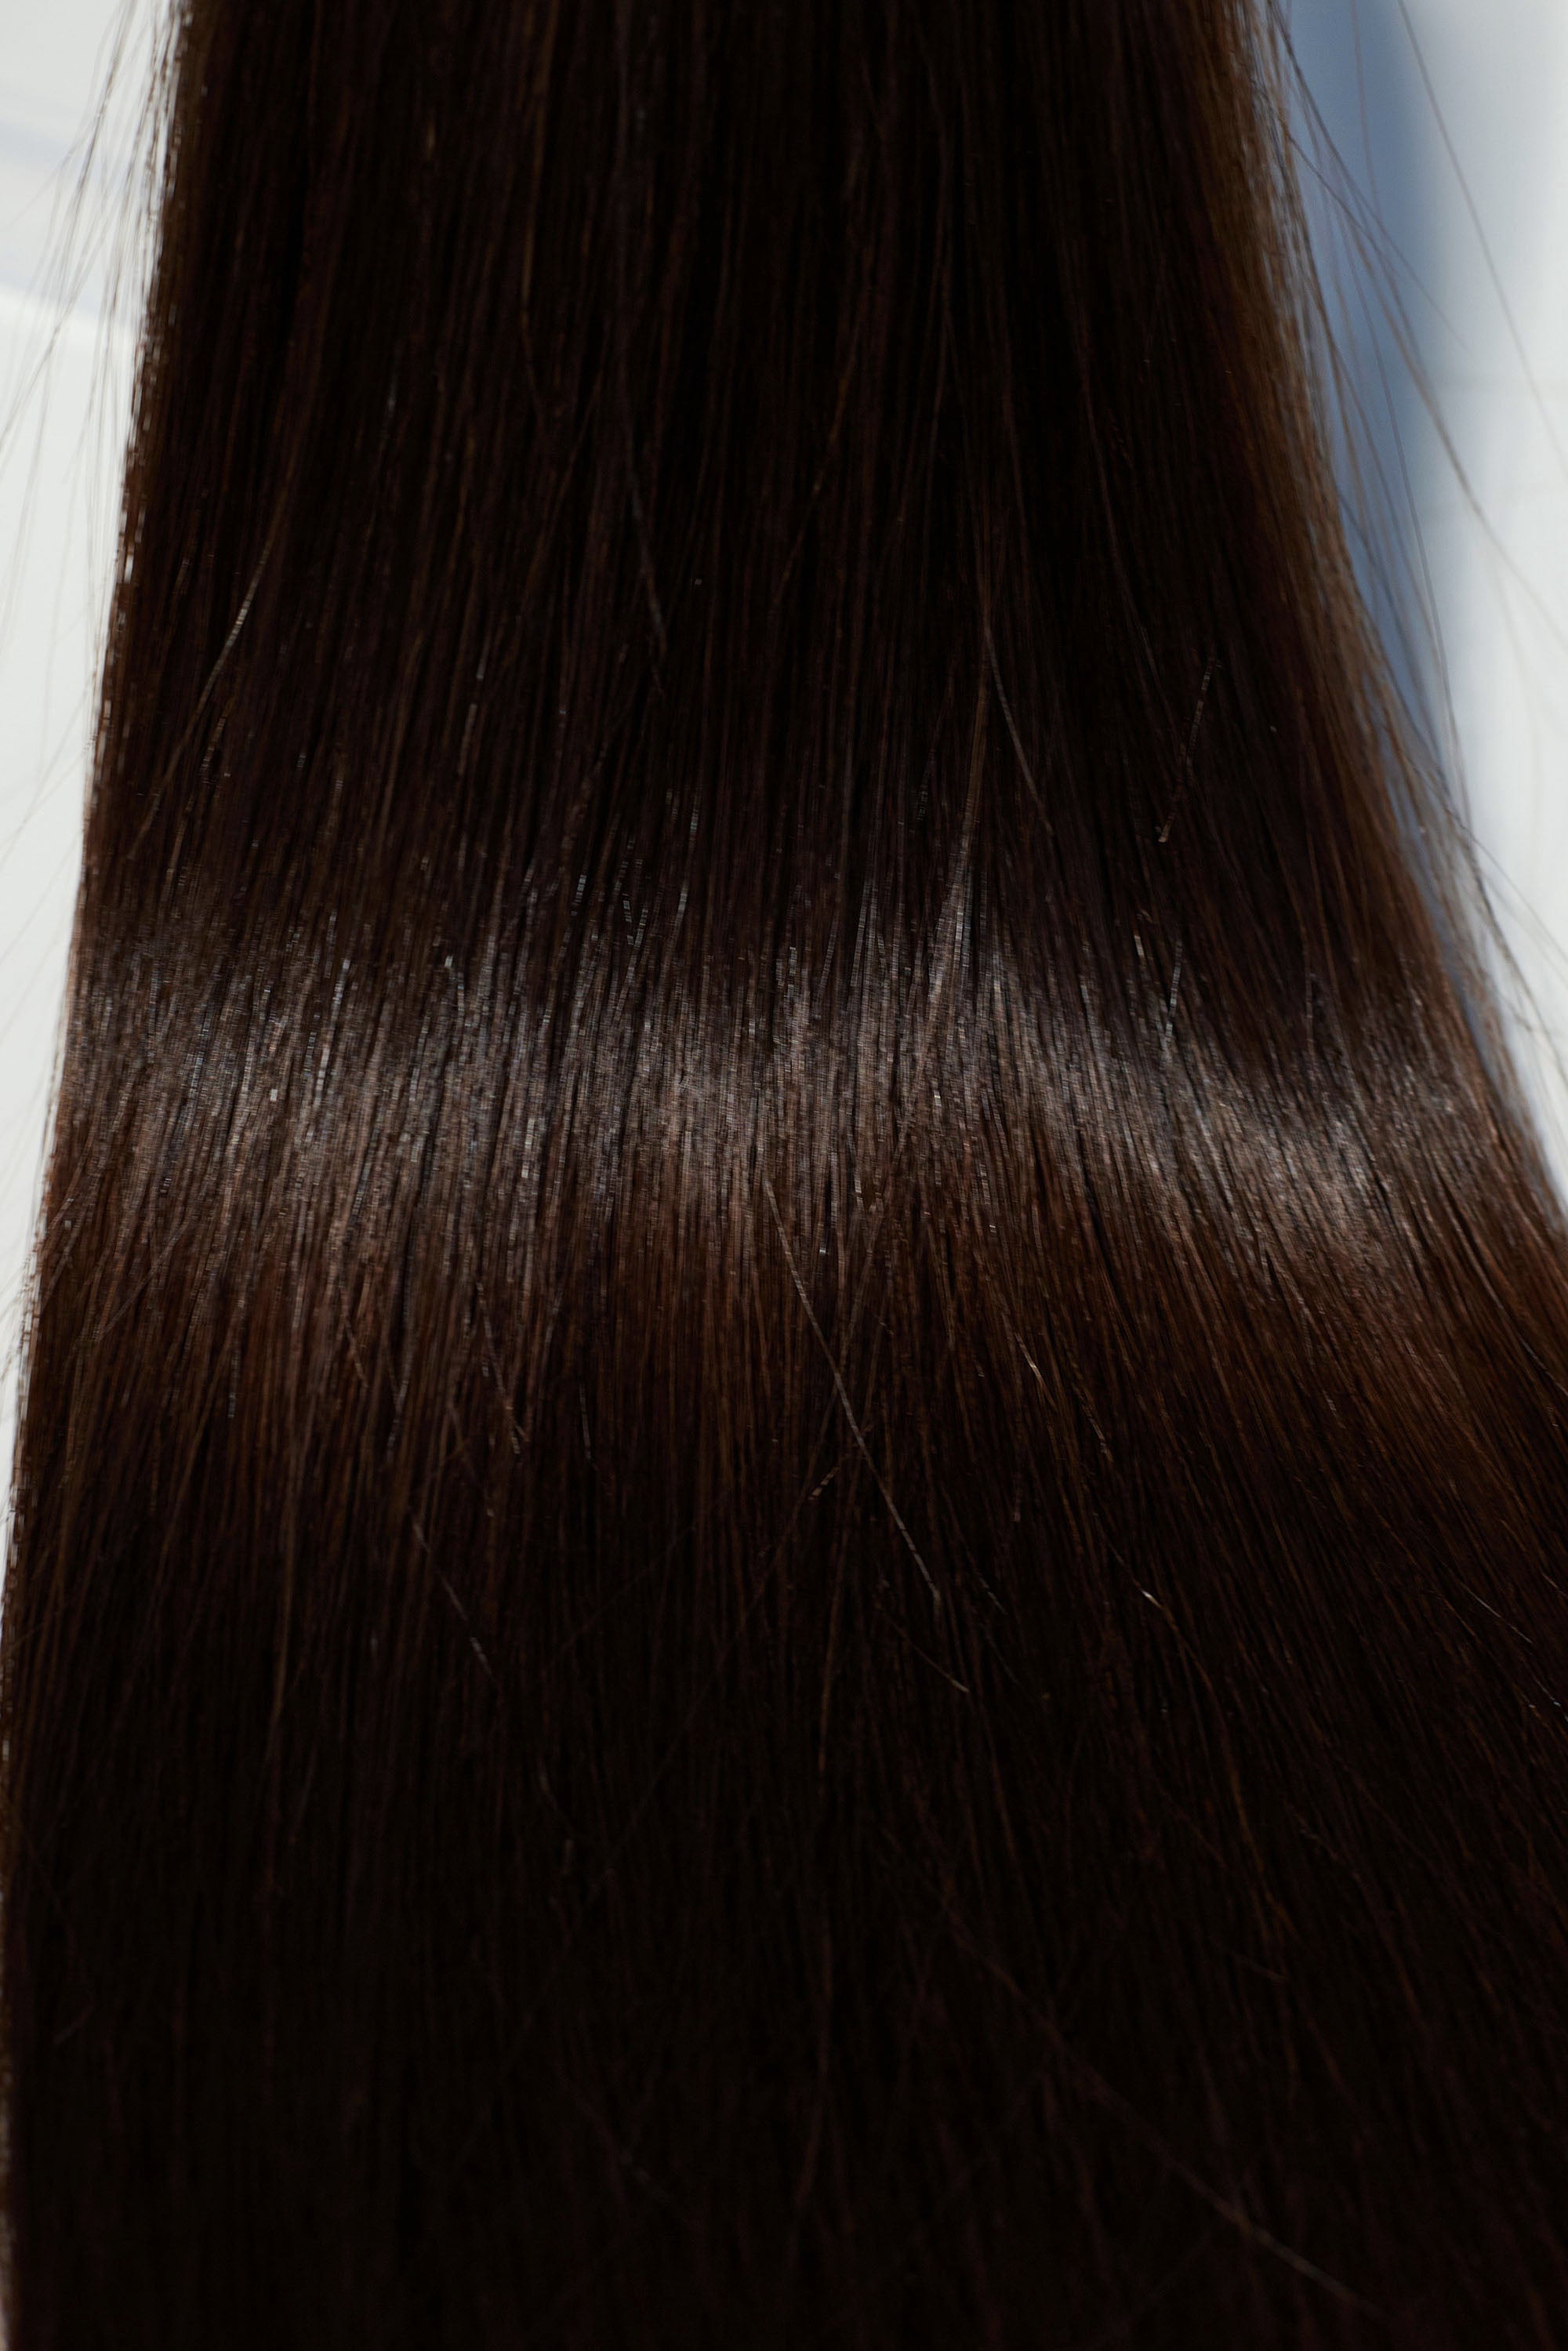 Behair professional Keratin Tip "Premium" 24" (60cm) Natural Straight Dark Coffee Brown #2 - 25g (Standart - 0.7g each pcs) hair extensions